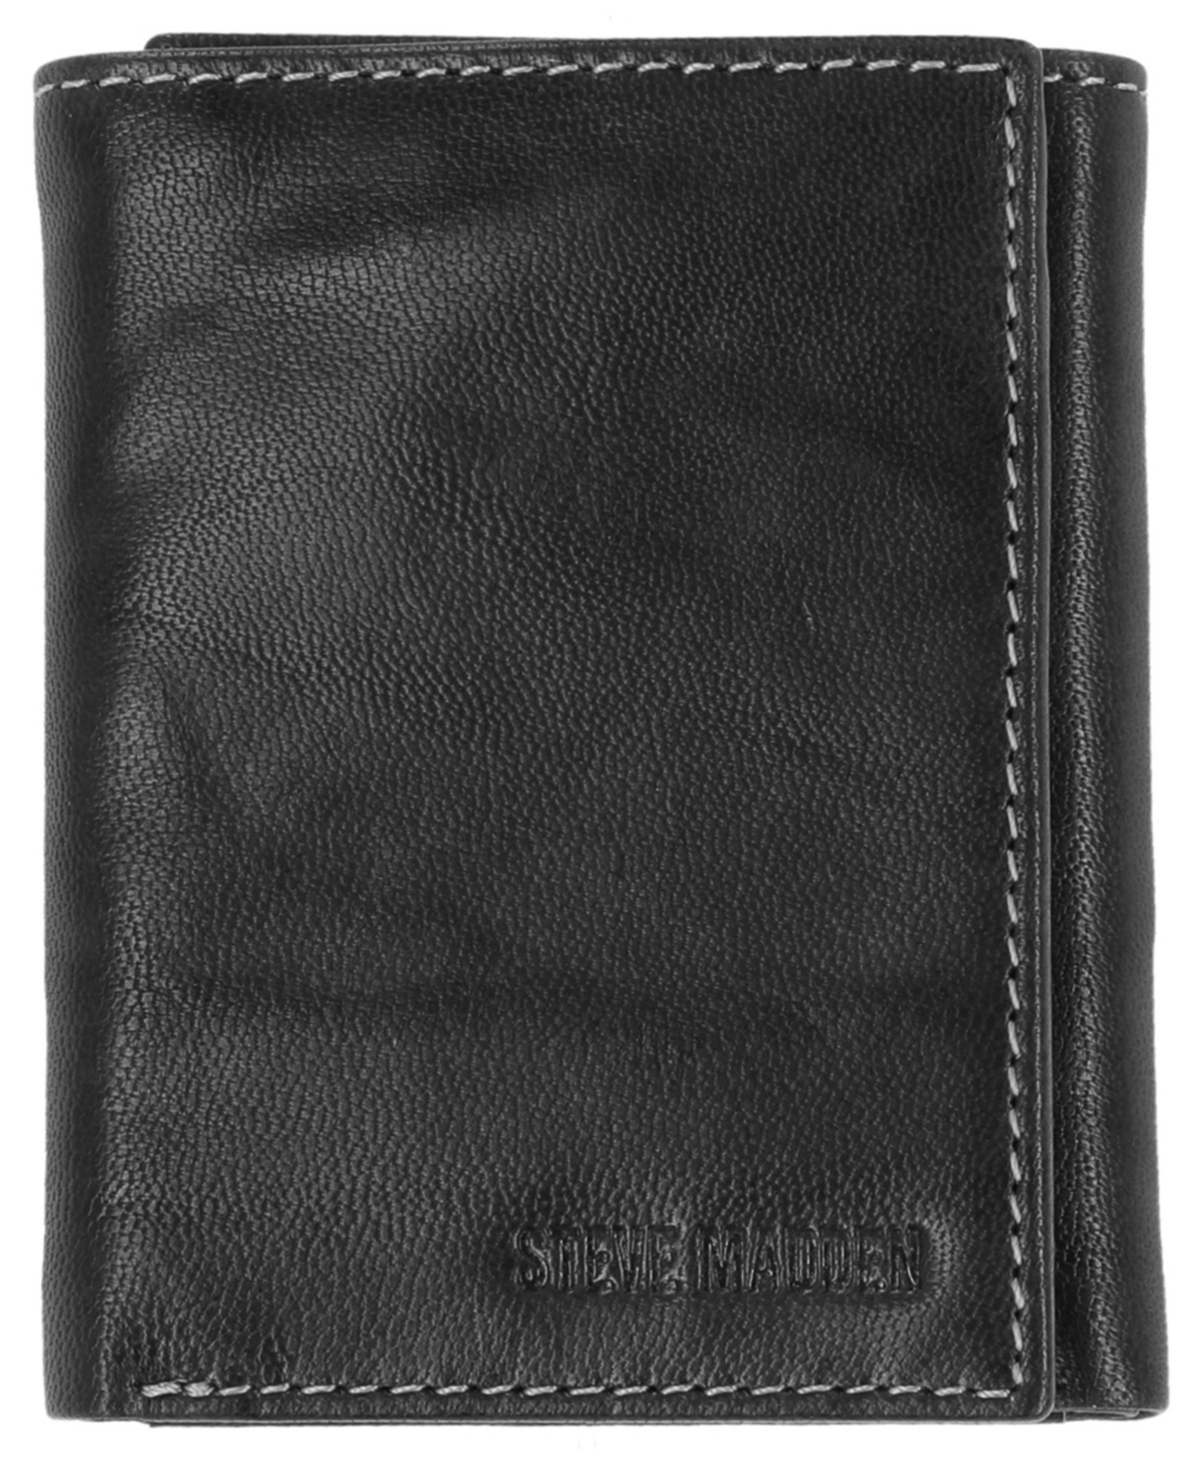 Steve Madden Men's Antique-like Trifold Wallet In Black